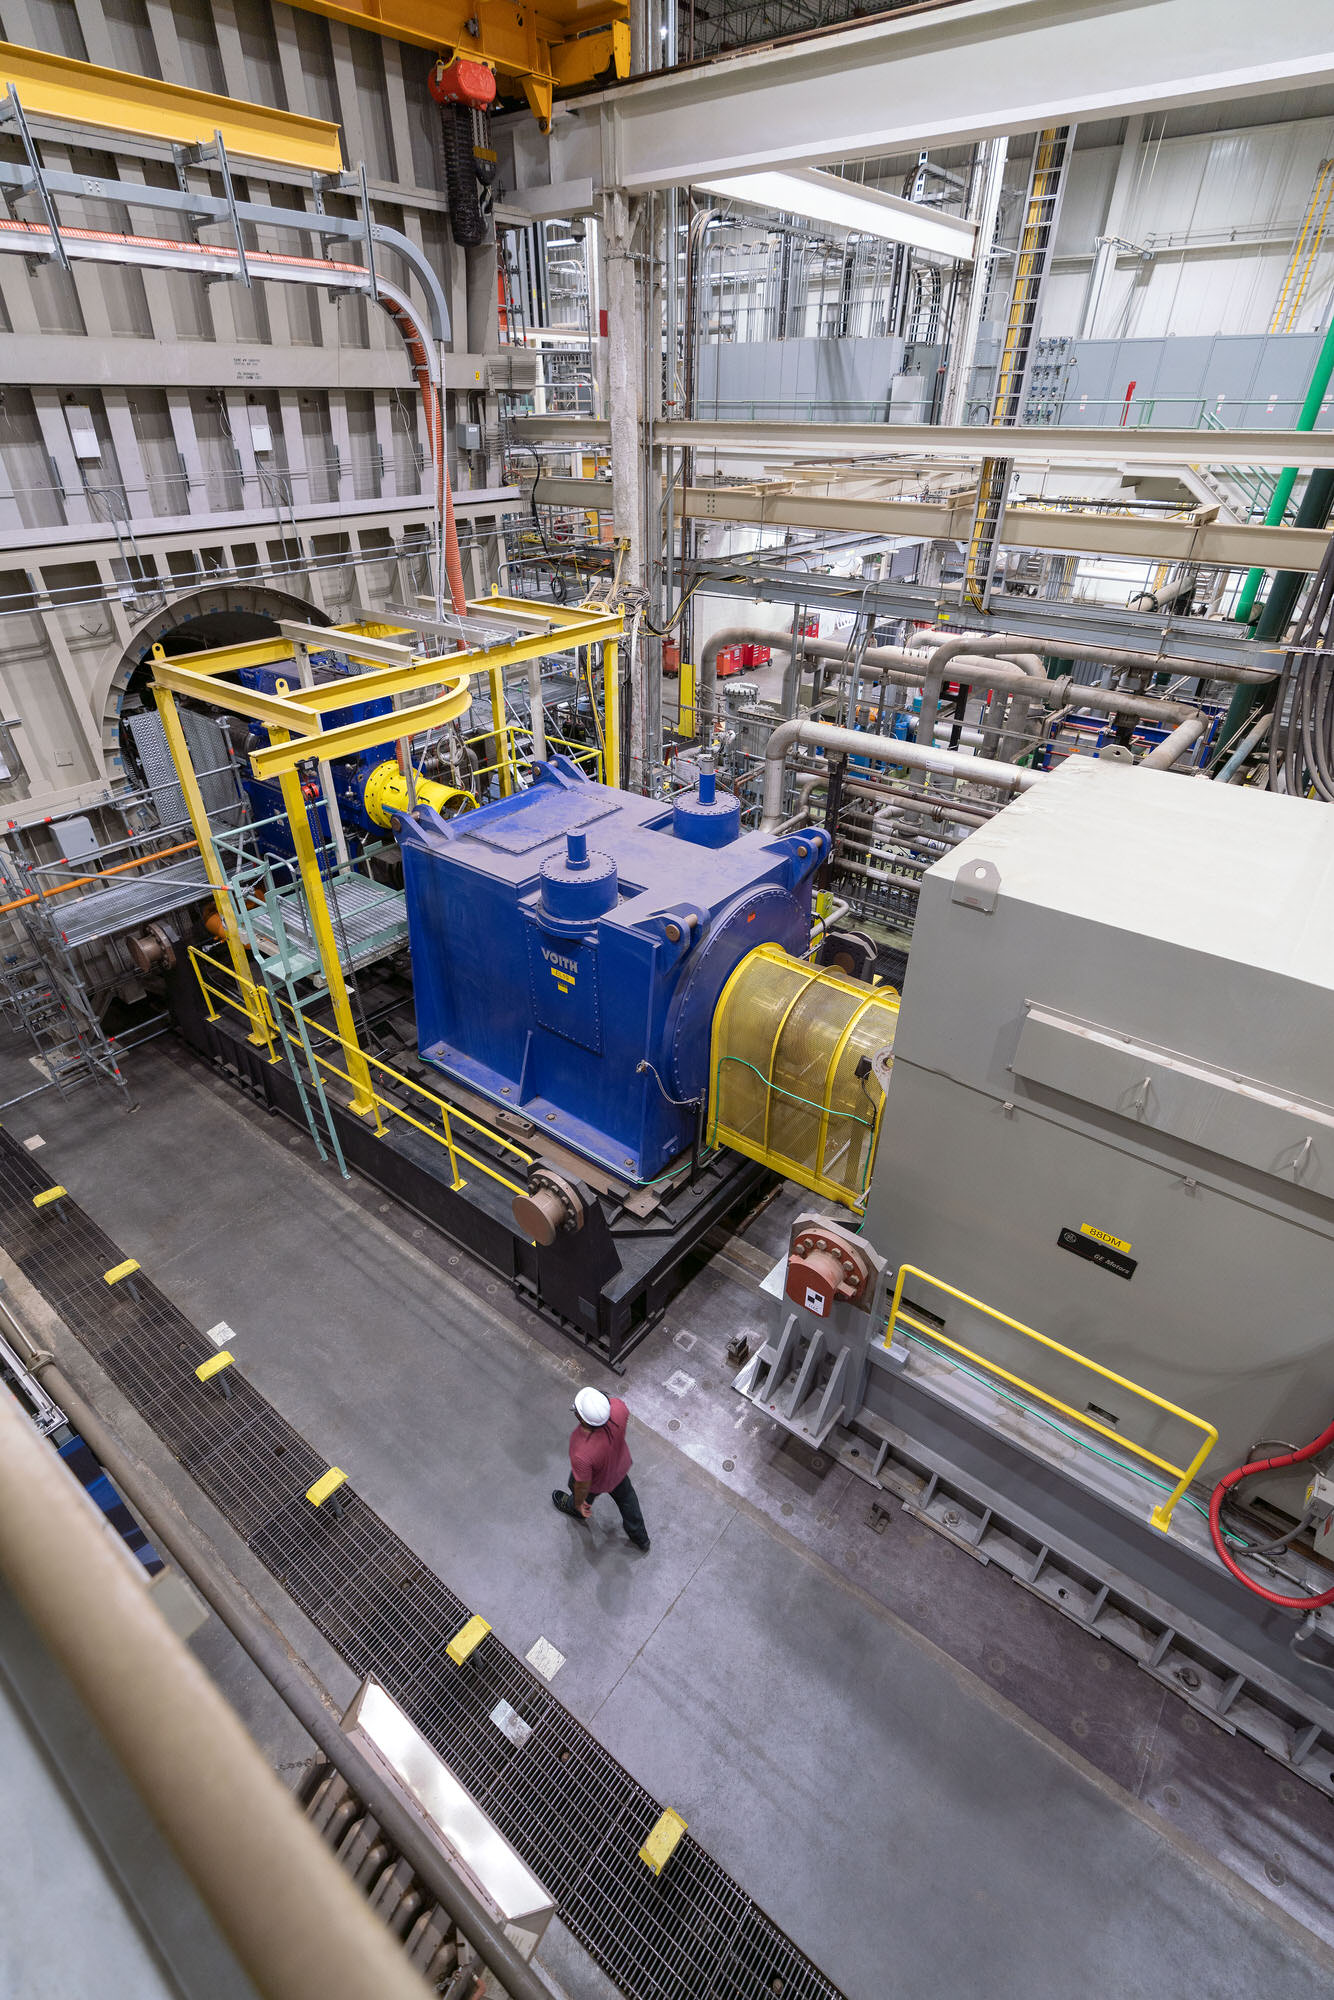 General Electric Gas Turbine testing facility in Greenville, South Carolina